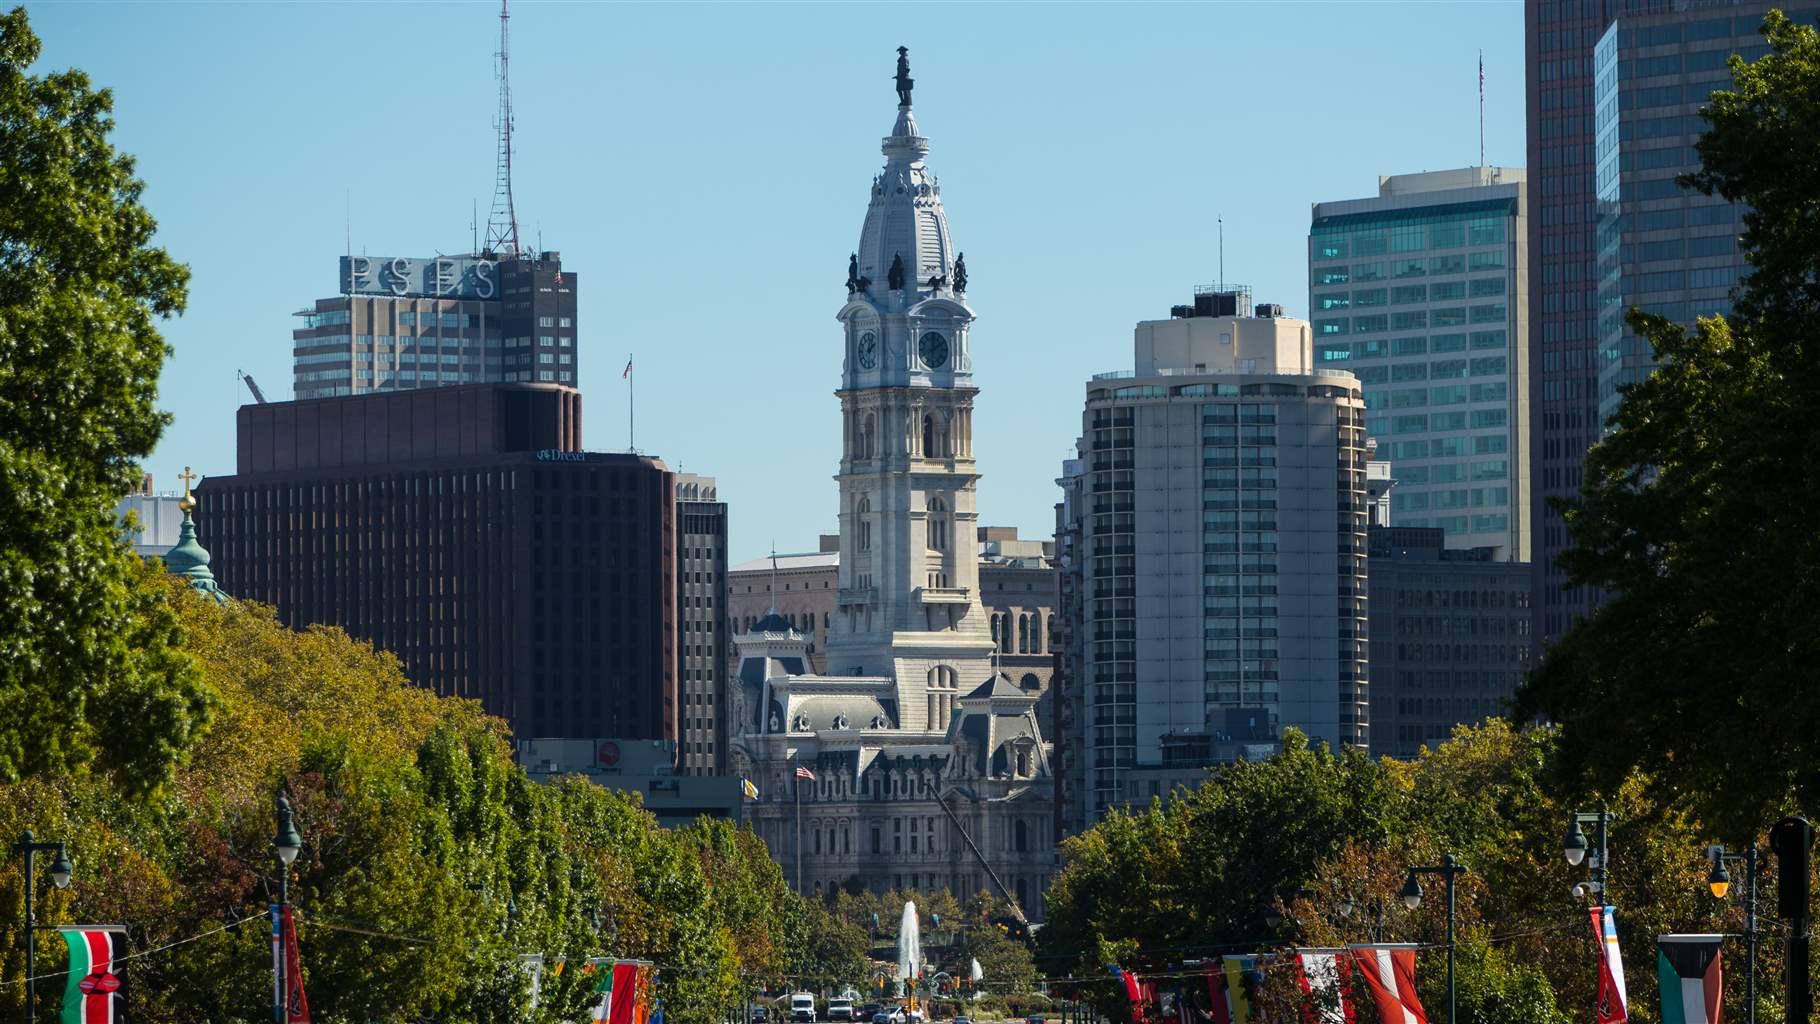 A view of Benjamin Franklin Parkway looking toward City Hall in Philadelphia, PA in 2017.